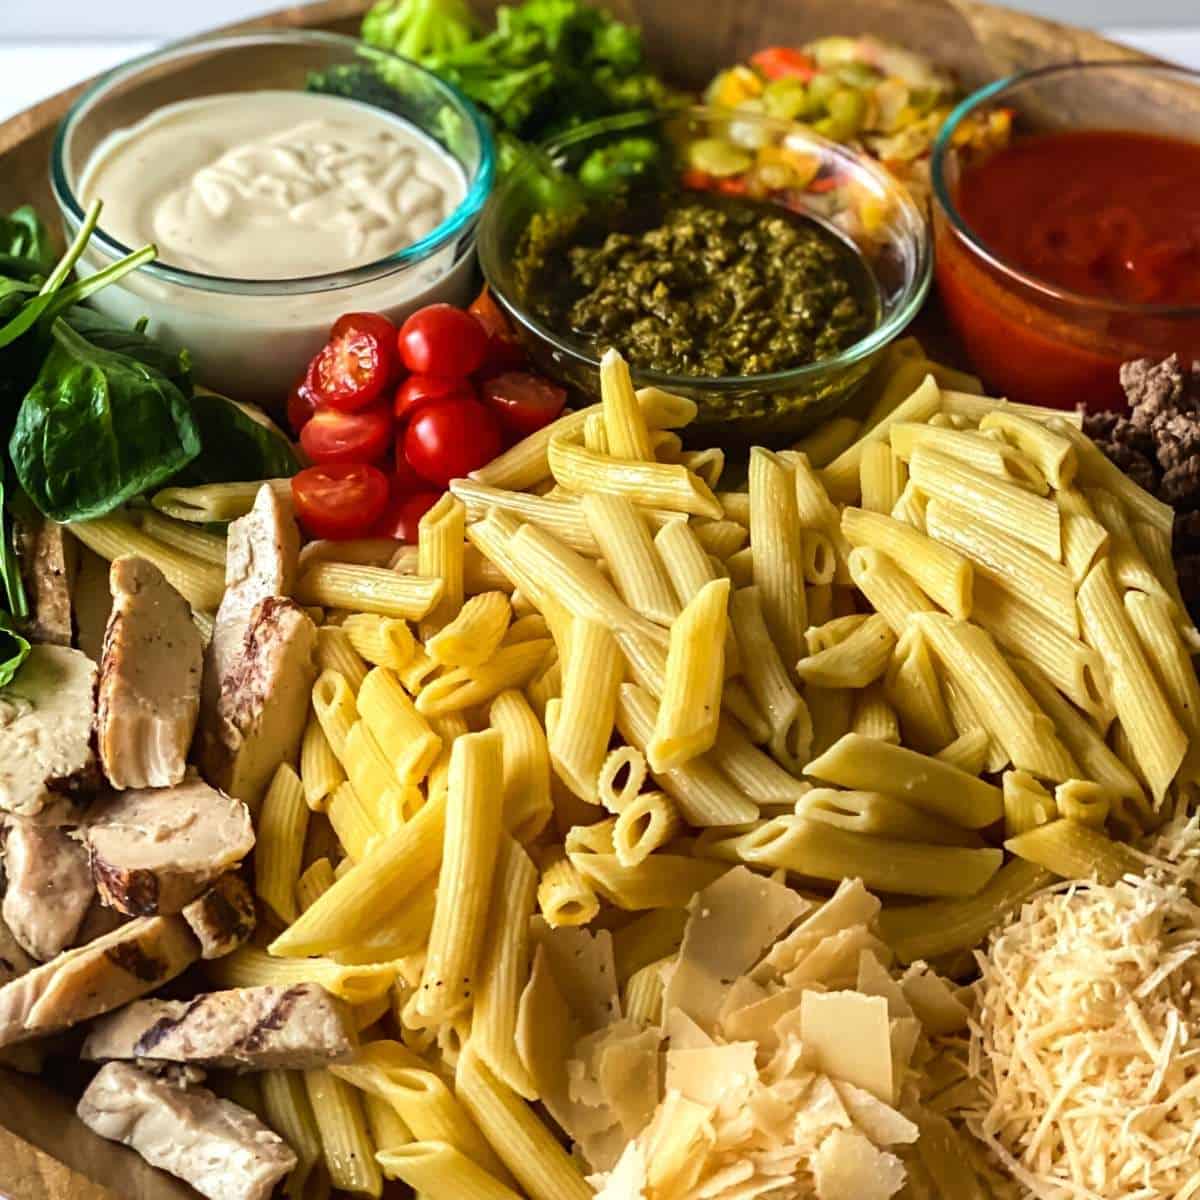 How to Make a Mediterranean Diet Charcuterie Board